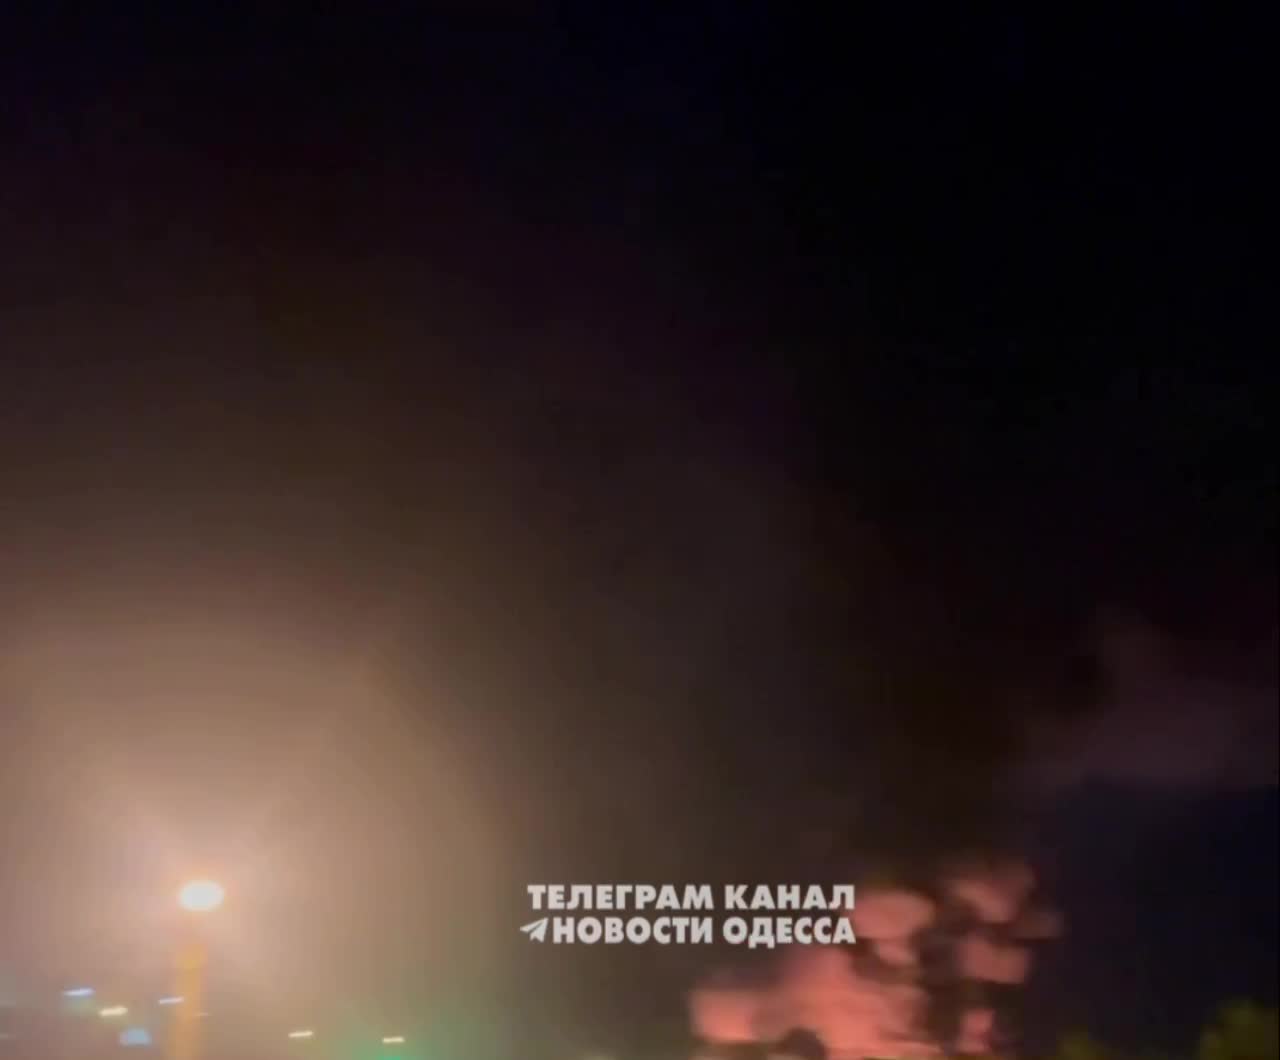 Großbrand nach gemeldetem Raketenangriff in Odessa